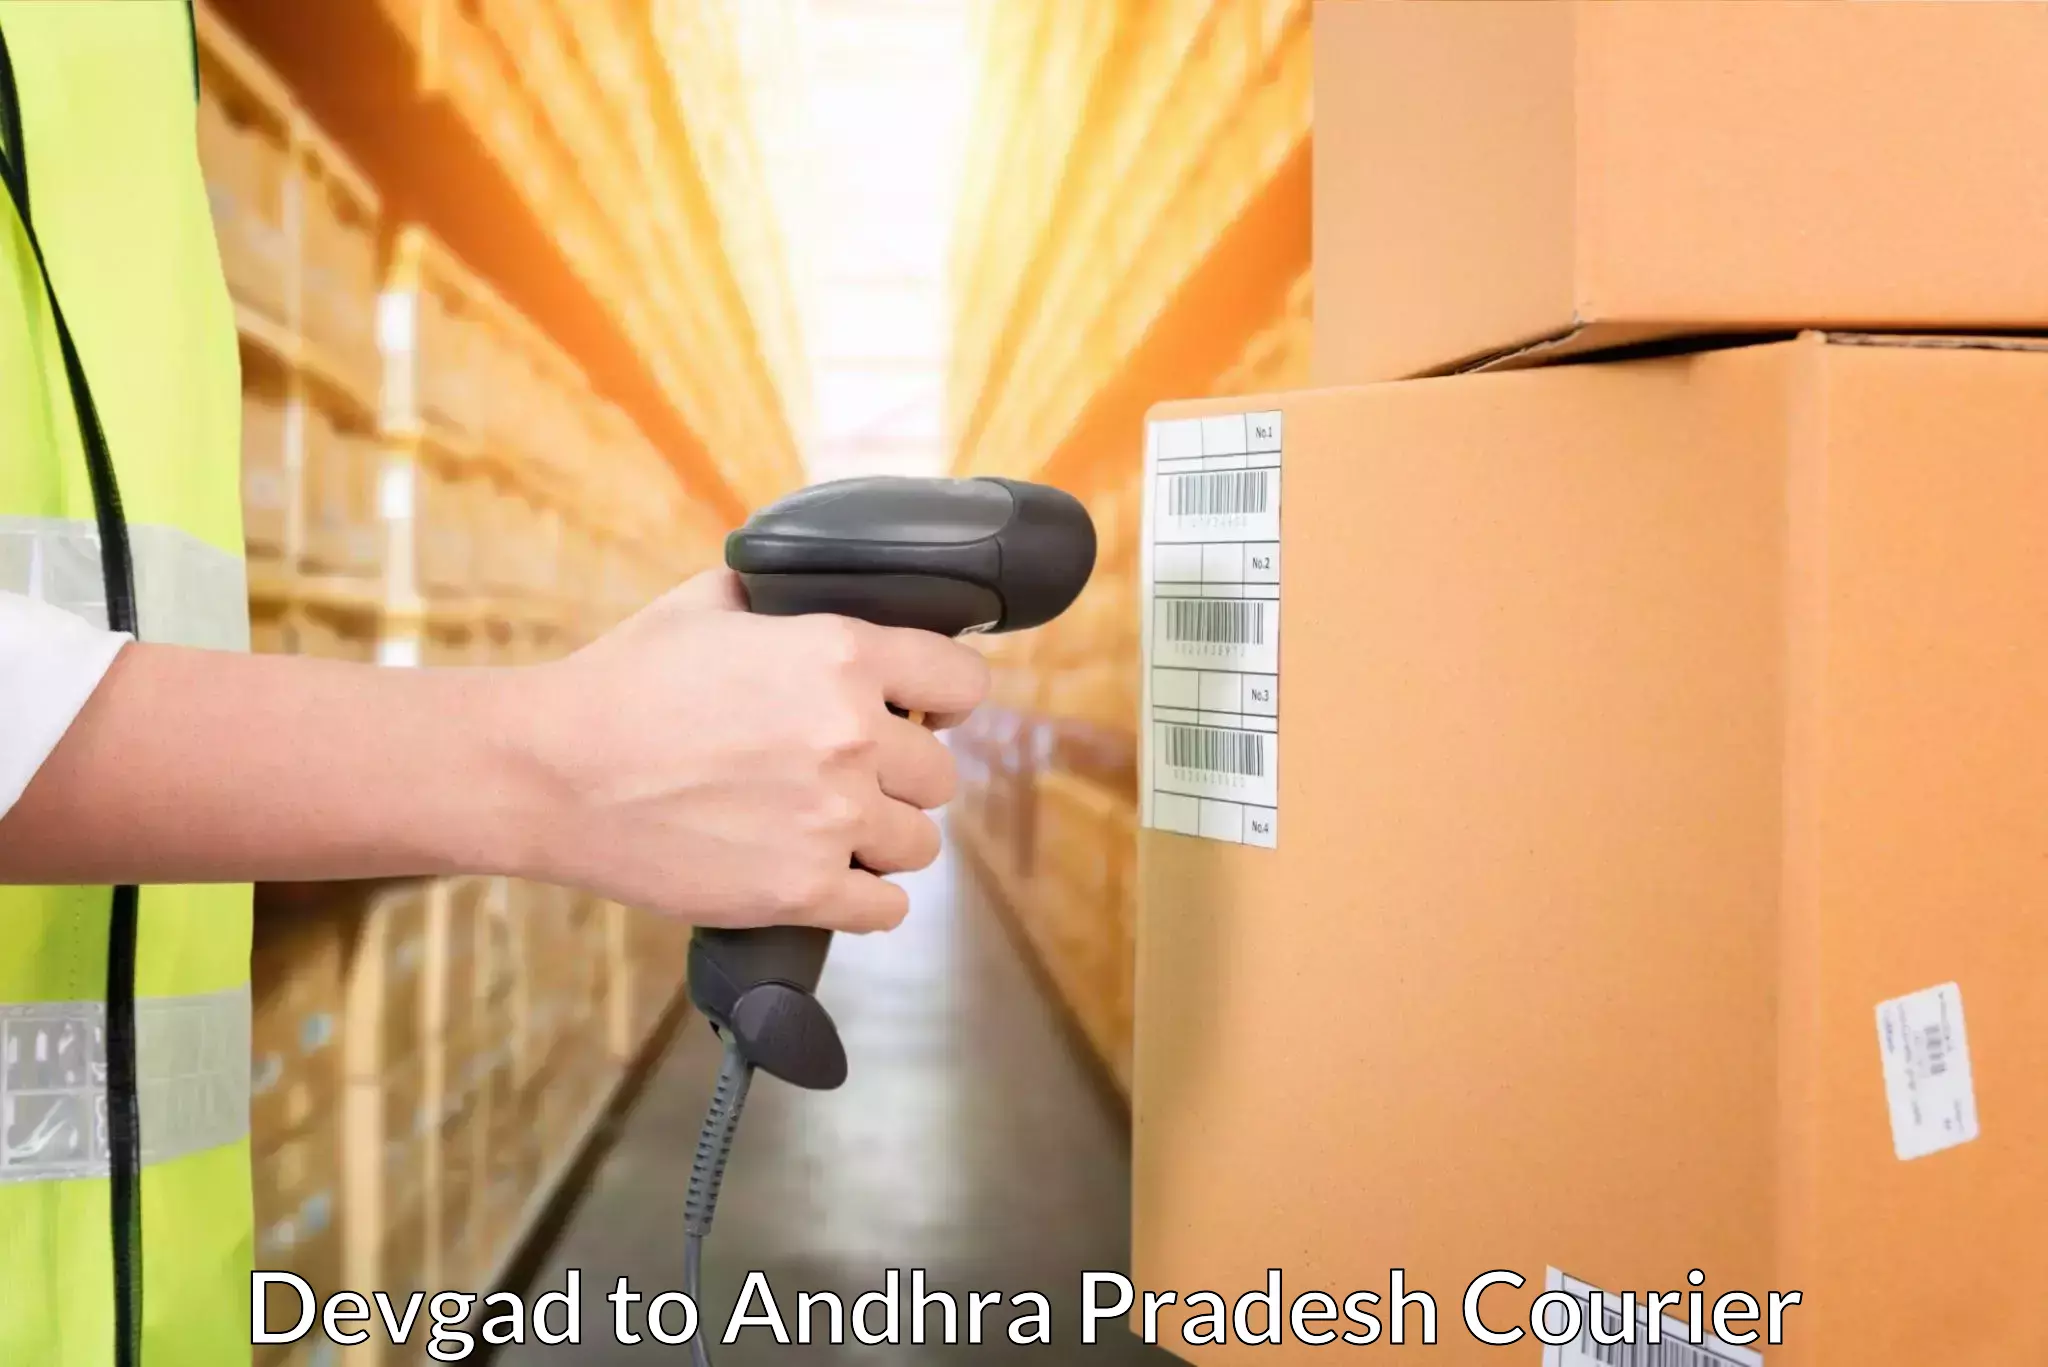 Express delivery solutions Devgad to Rajahmundry